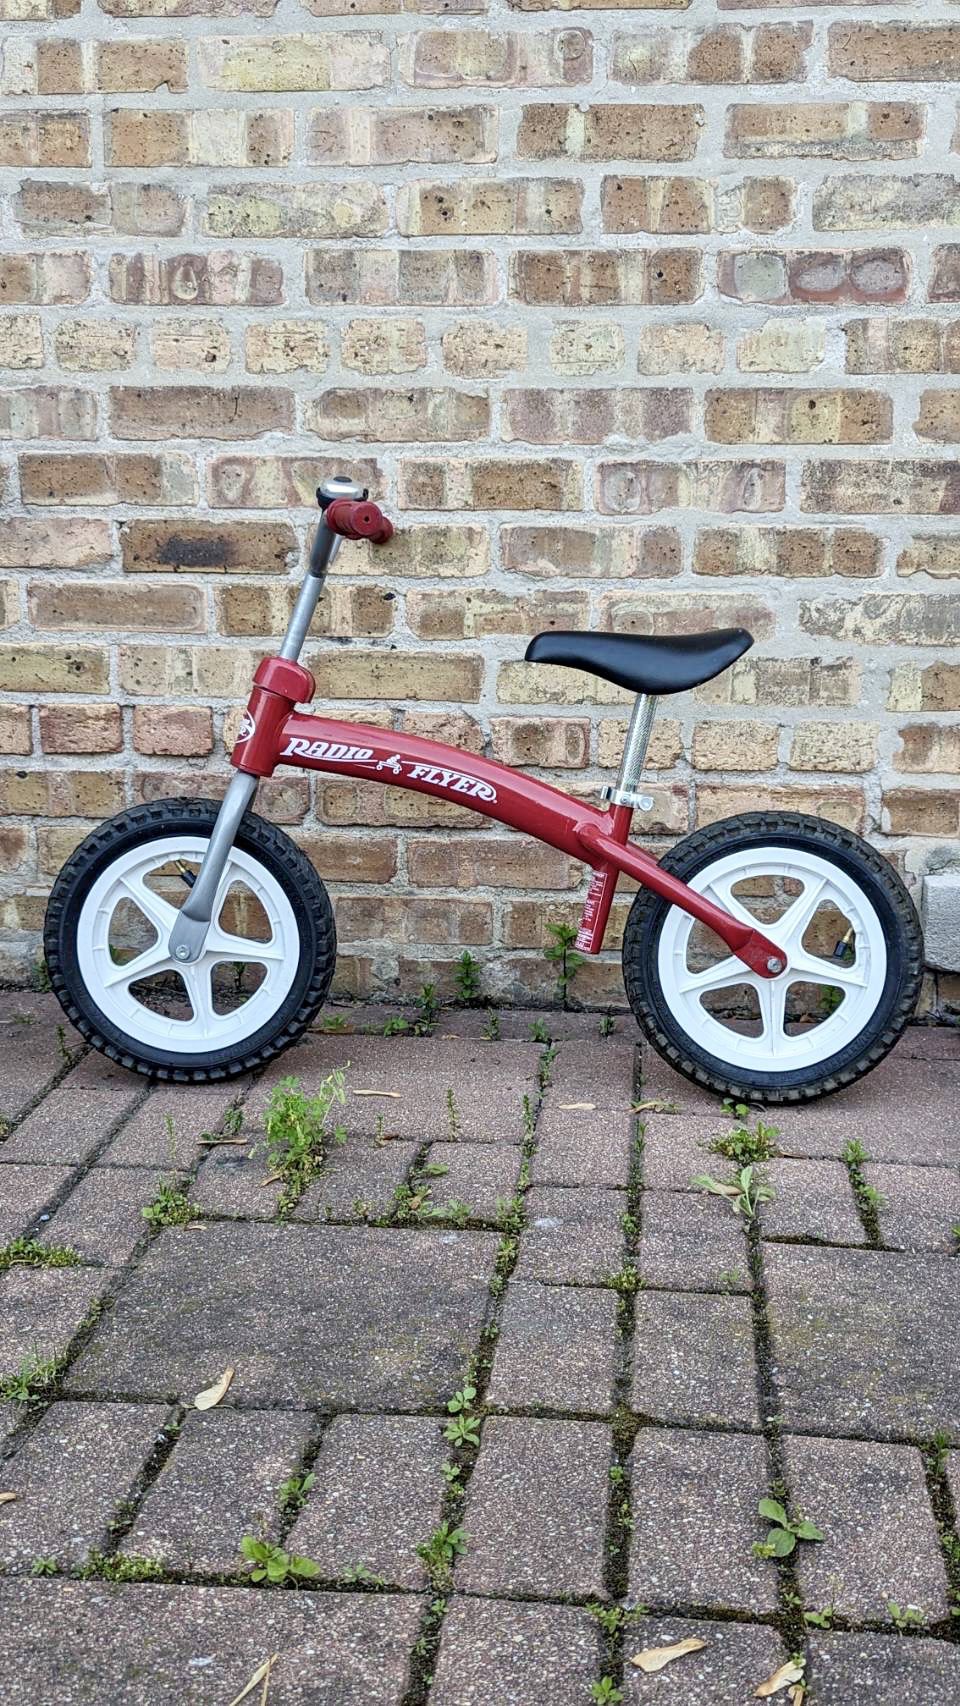 Radio Flyer Go Balance Bike Pre-Bike Glider Girl Boy Unisex Red Age 2.5-4 years old